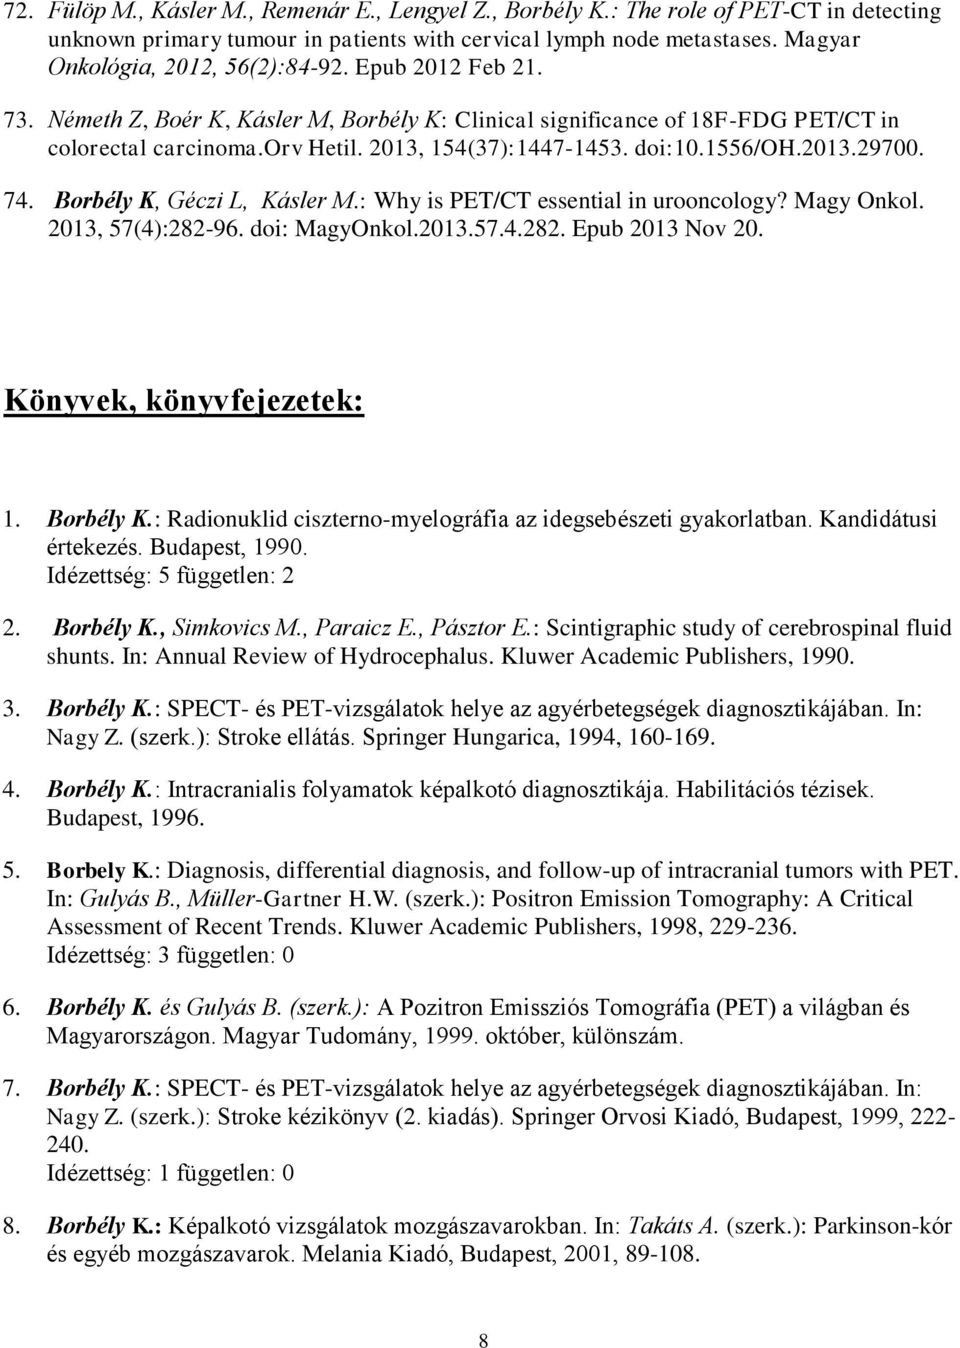 doi:10.1556/oh.2013.29700. 74. Borbély K, Géczi L, Kásler M.: Why is PET/CT essential in urooncology? Magy Onkol. 2013, 57(4):282-96. doi: MagyOnkol.2013.57.4.282. Epub 2013 Nov 20.